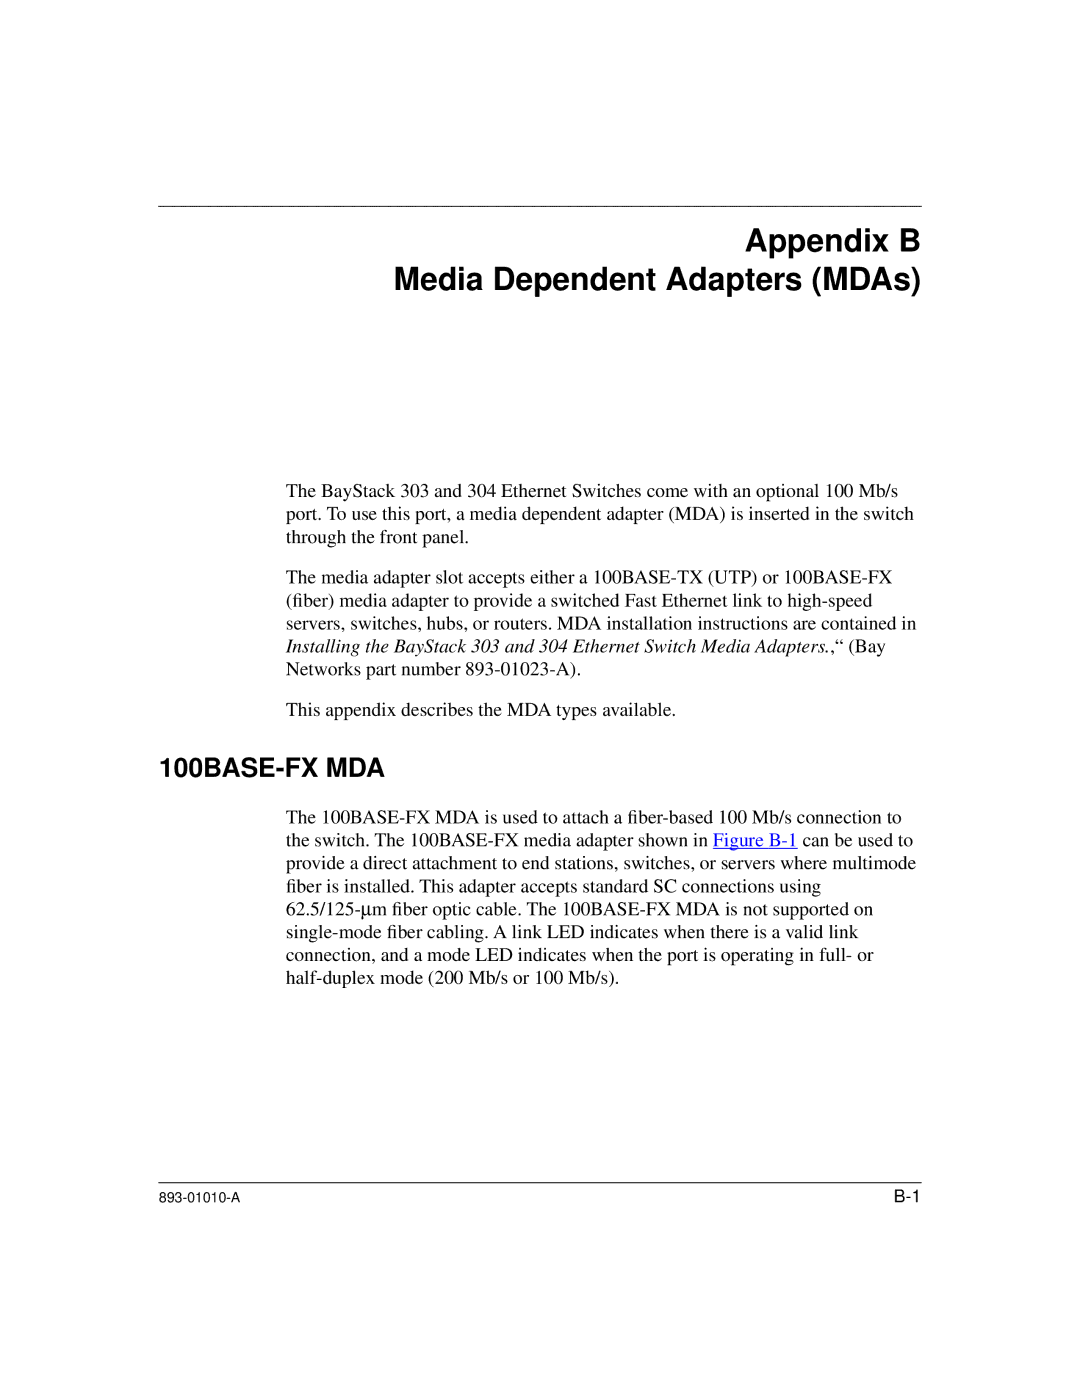 Bay Technical Associates 303, 304 manual Appendix B Media Dependent Adapters MDAs 